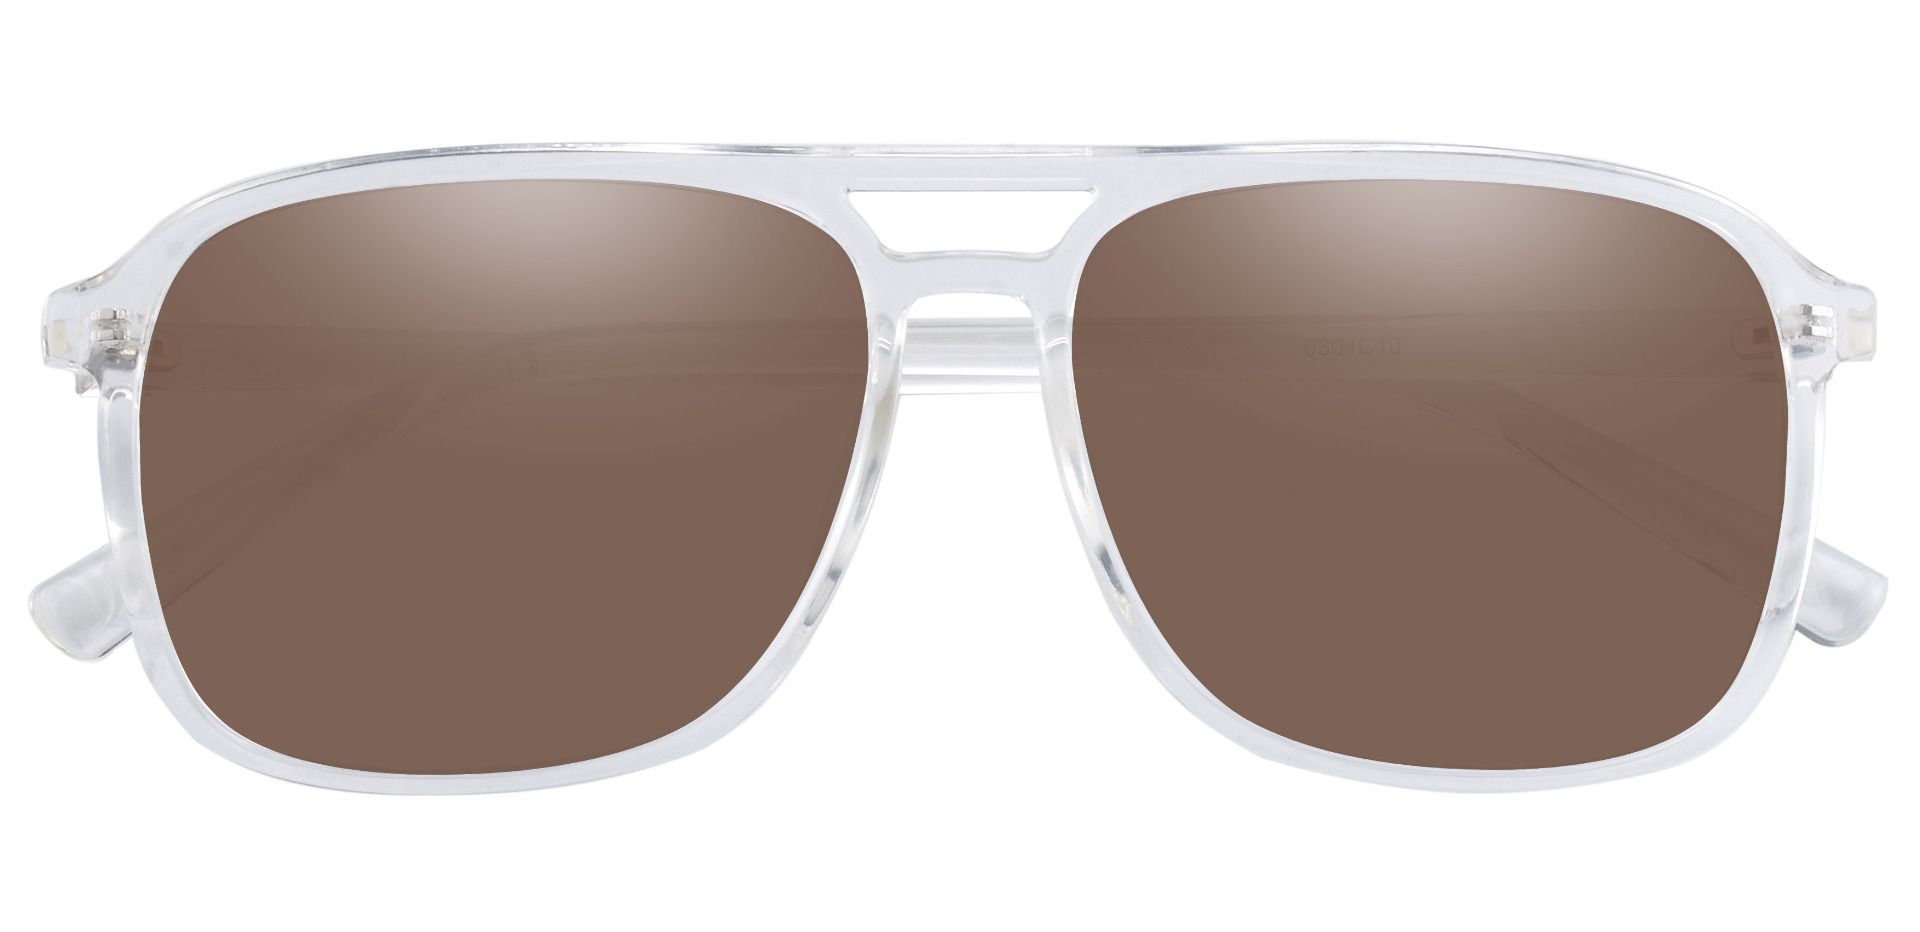 Edward Aviator Prescription Sunglasses -  Clear Frame With Brown Lenses